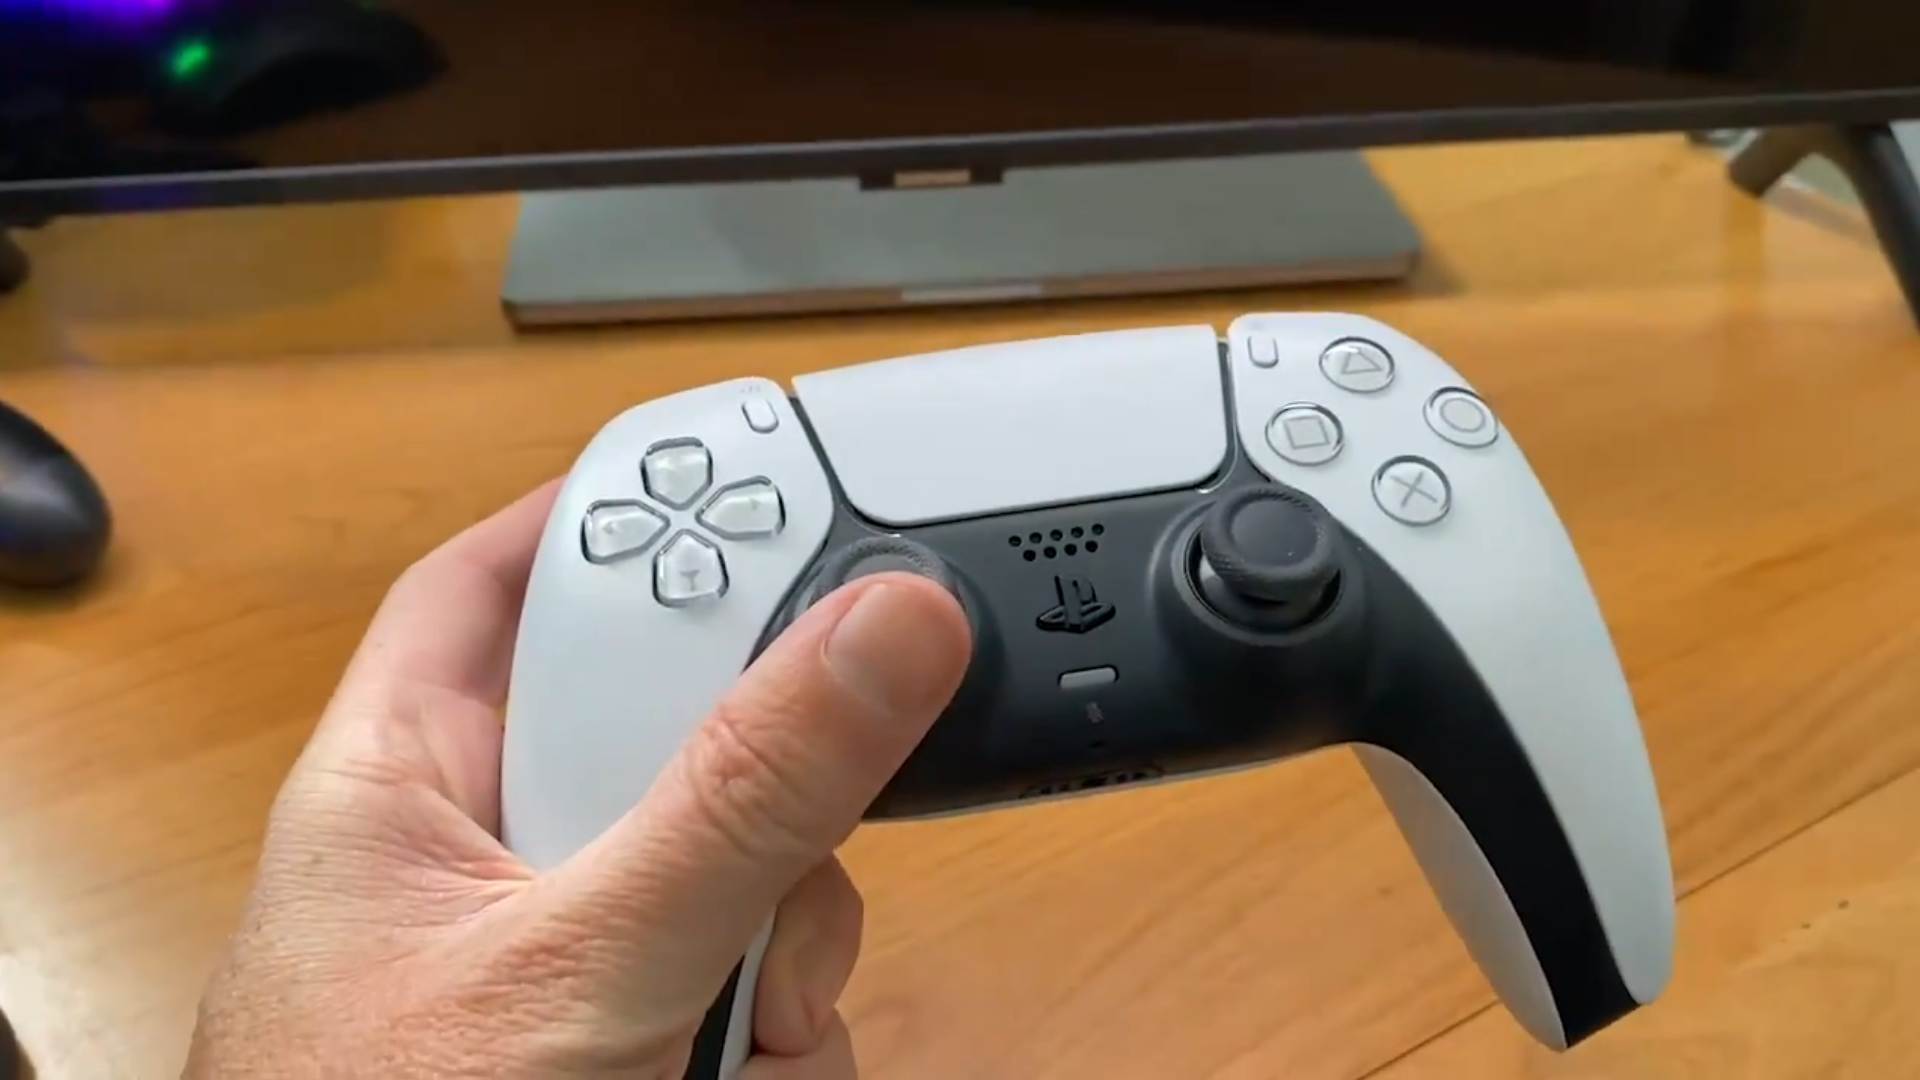 Geoff Keighley เตรียมโชว์การเล่นเกมโดยใช้จอย DualSense ของ PS5 ในวันนี้